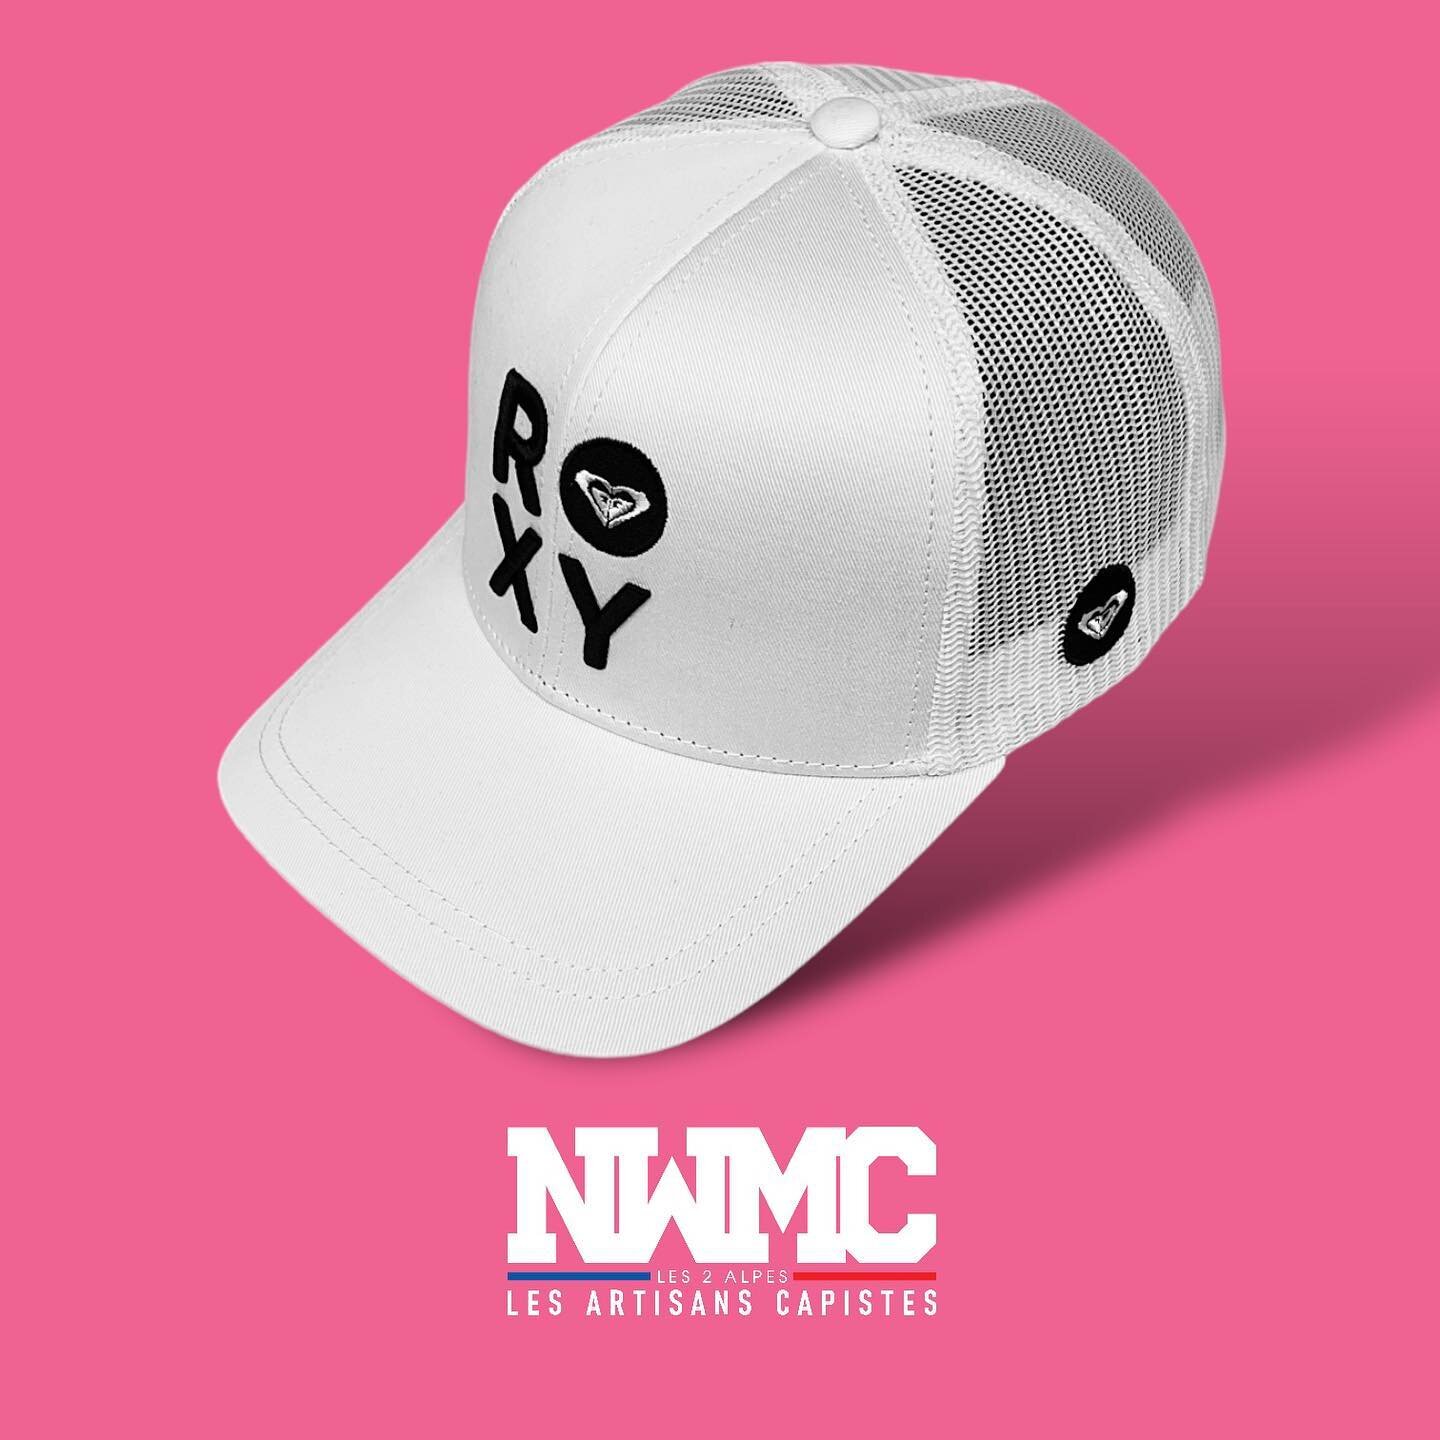 New 100% customized caps for the @roxy team 🧢 
.
.
.
.
.
.
.
.
.
.
#nwmc #lesartisancapistes #customcap #roxy #team #girl #saintjeandeluz #surf #skate #snow #casquette #trucker #mountain #wave #makewavesmovemountains